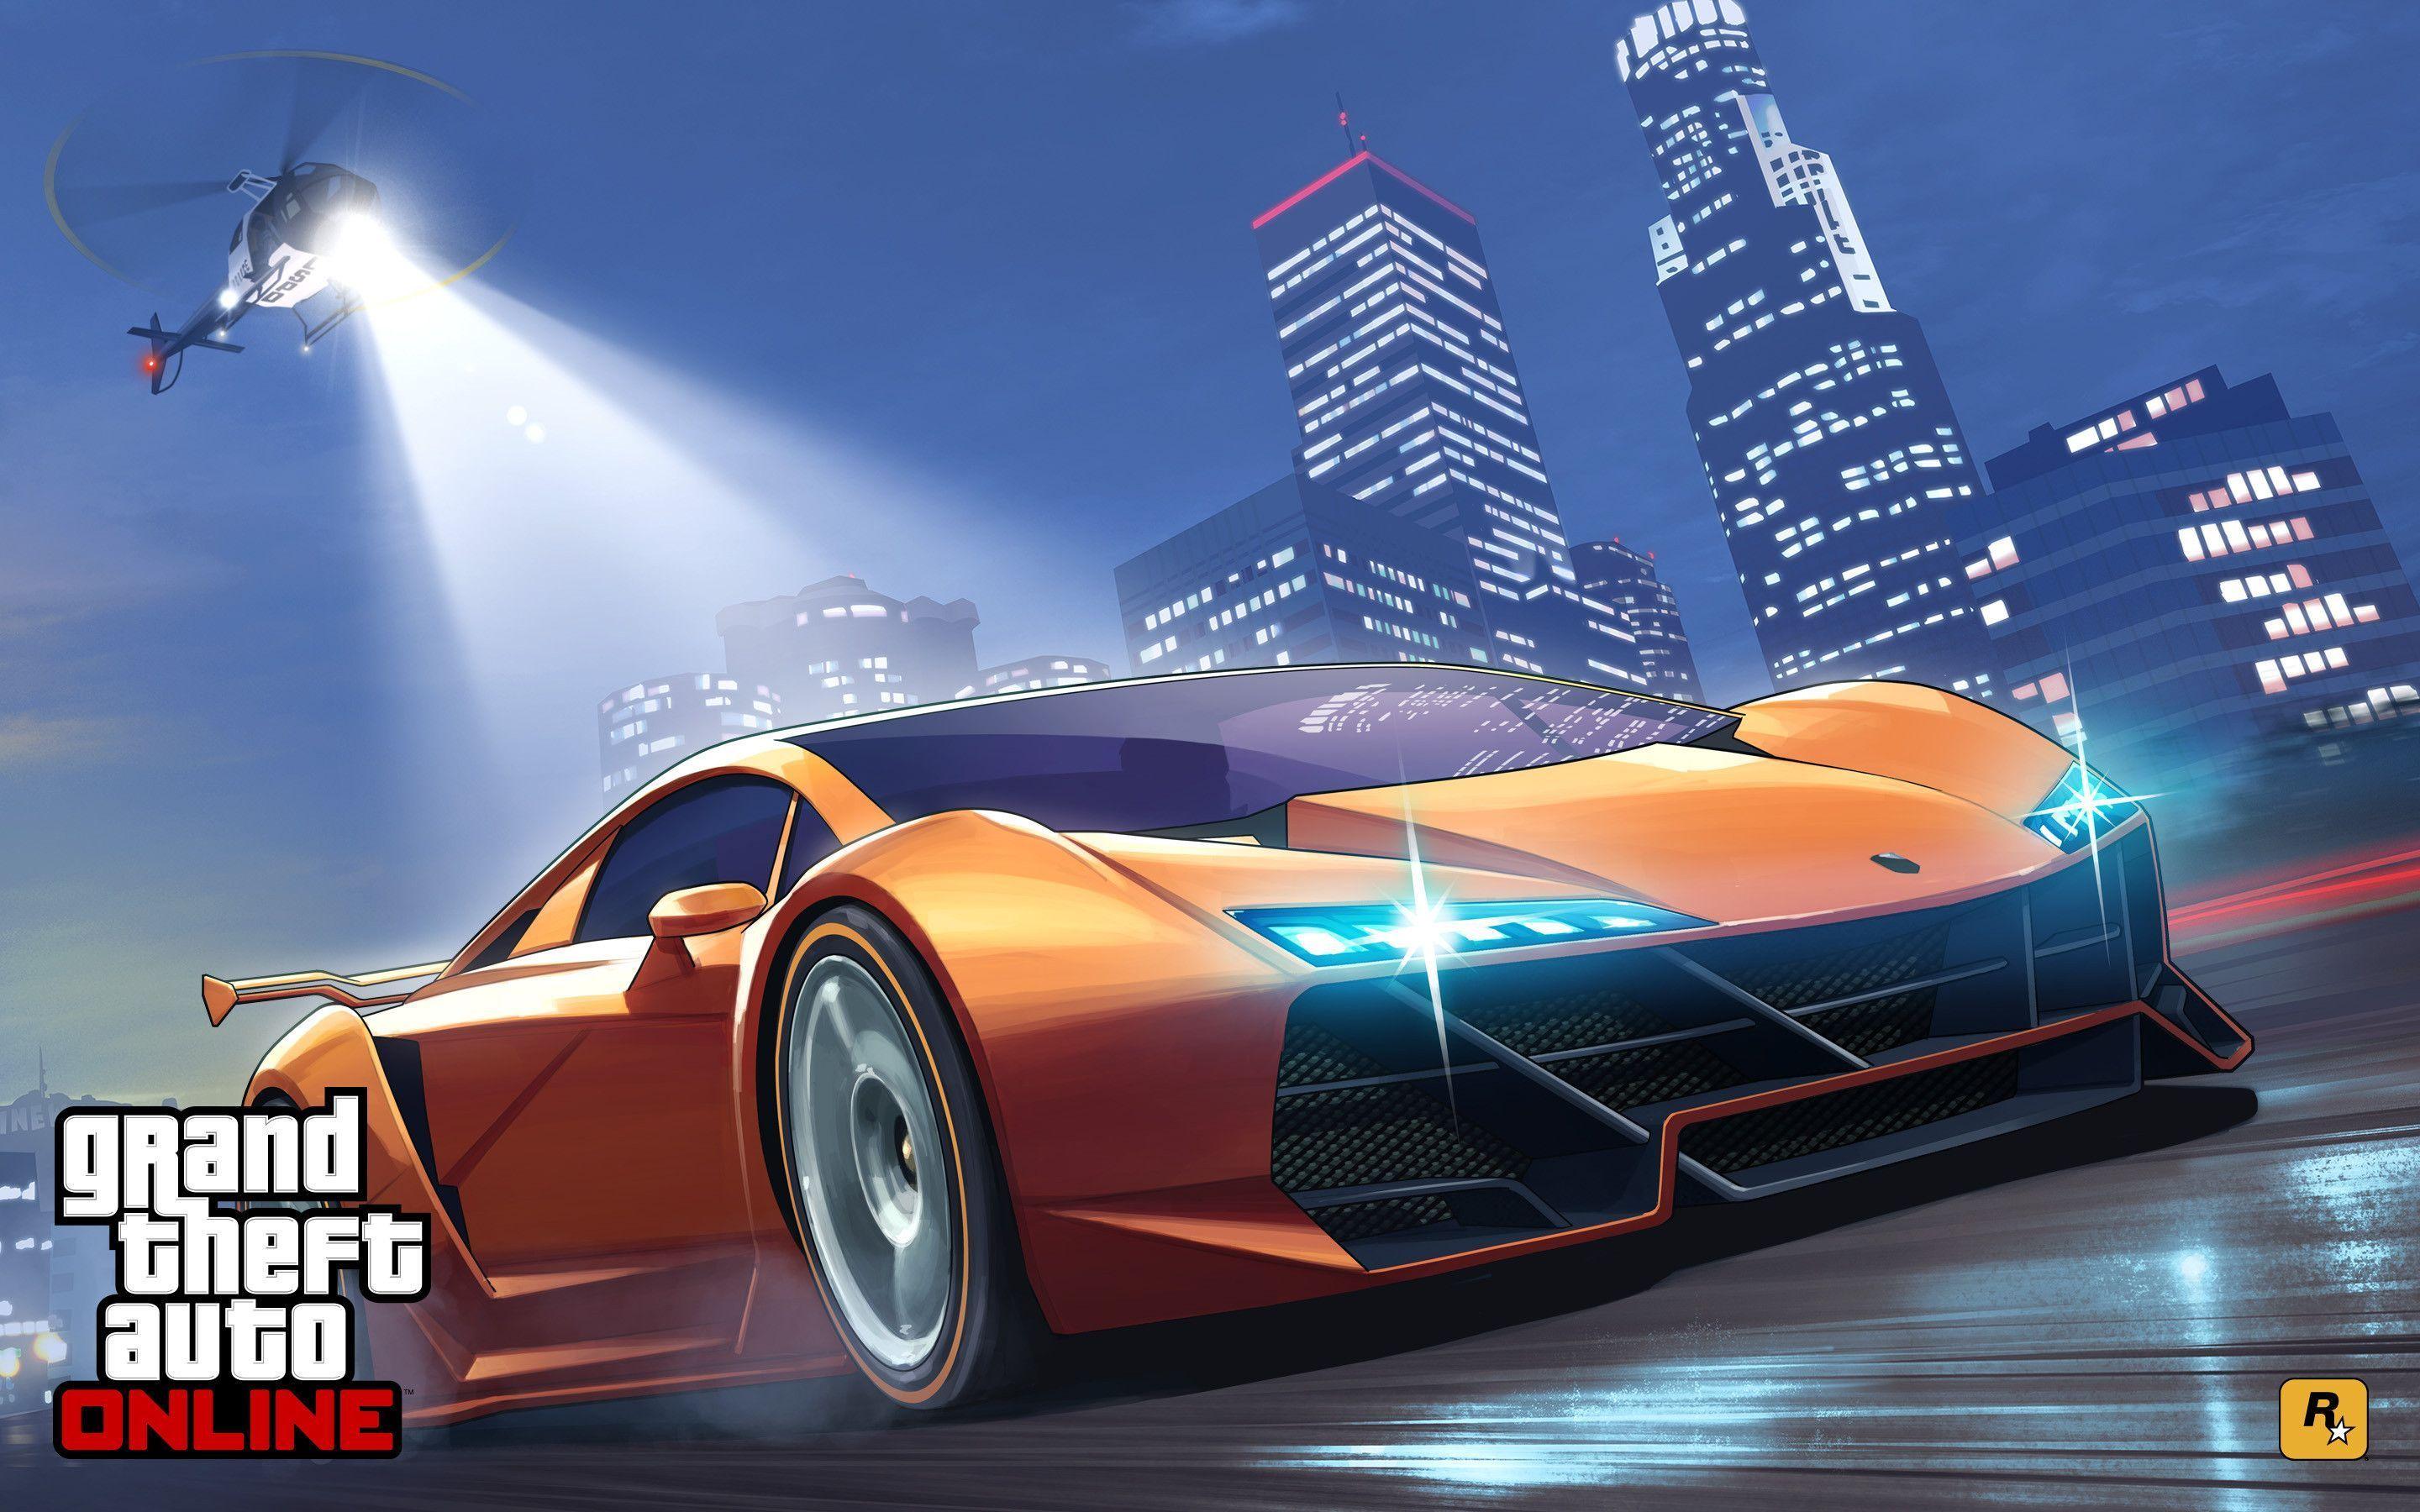 Grand Theft Auto Online 2015 Wallpaper